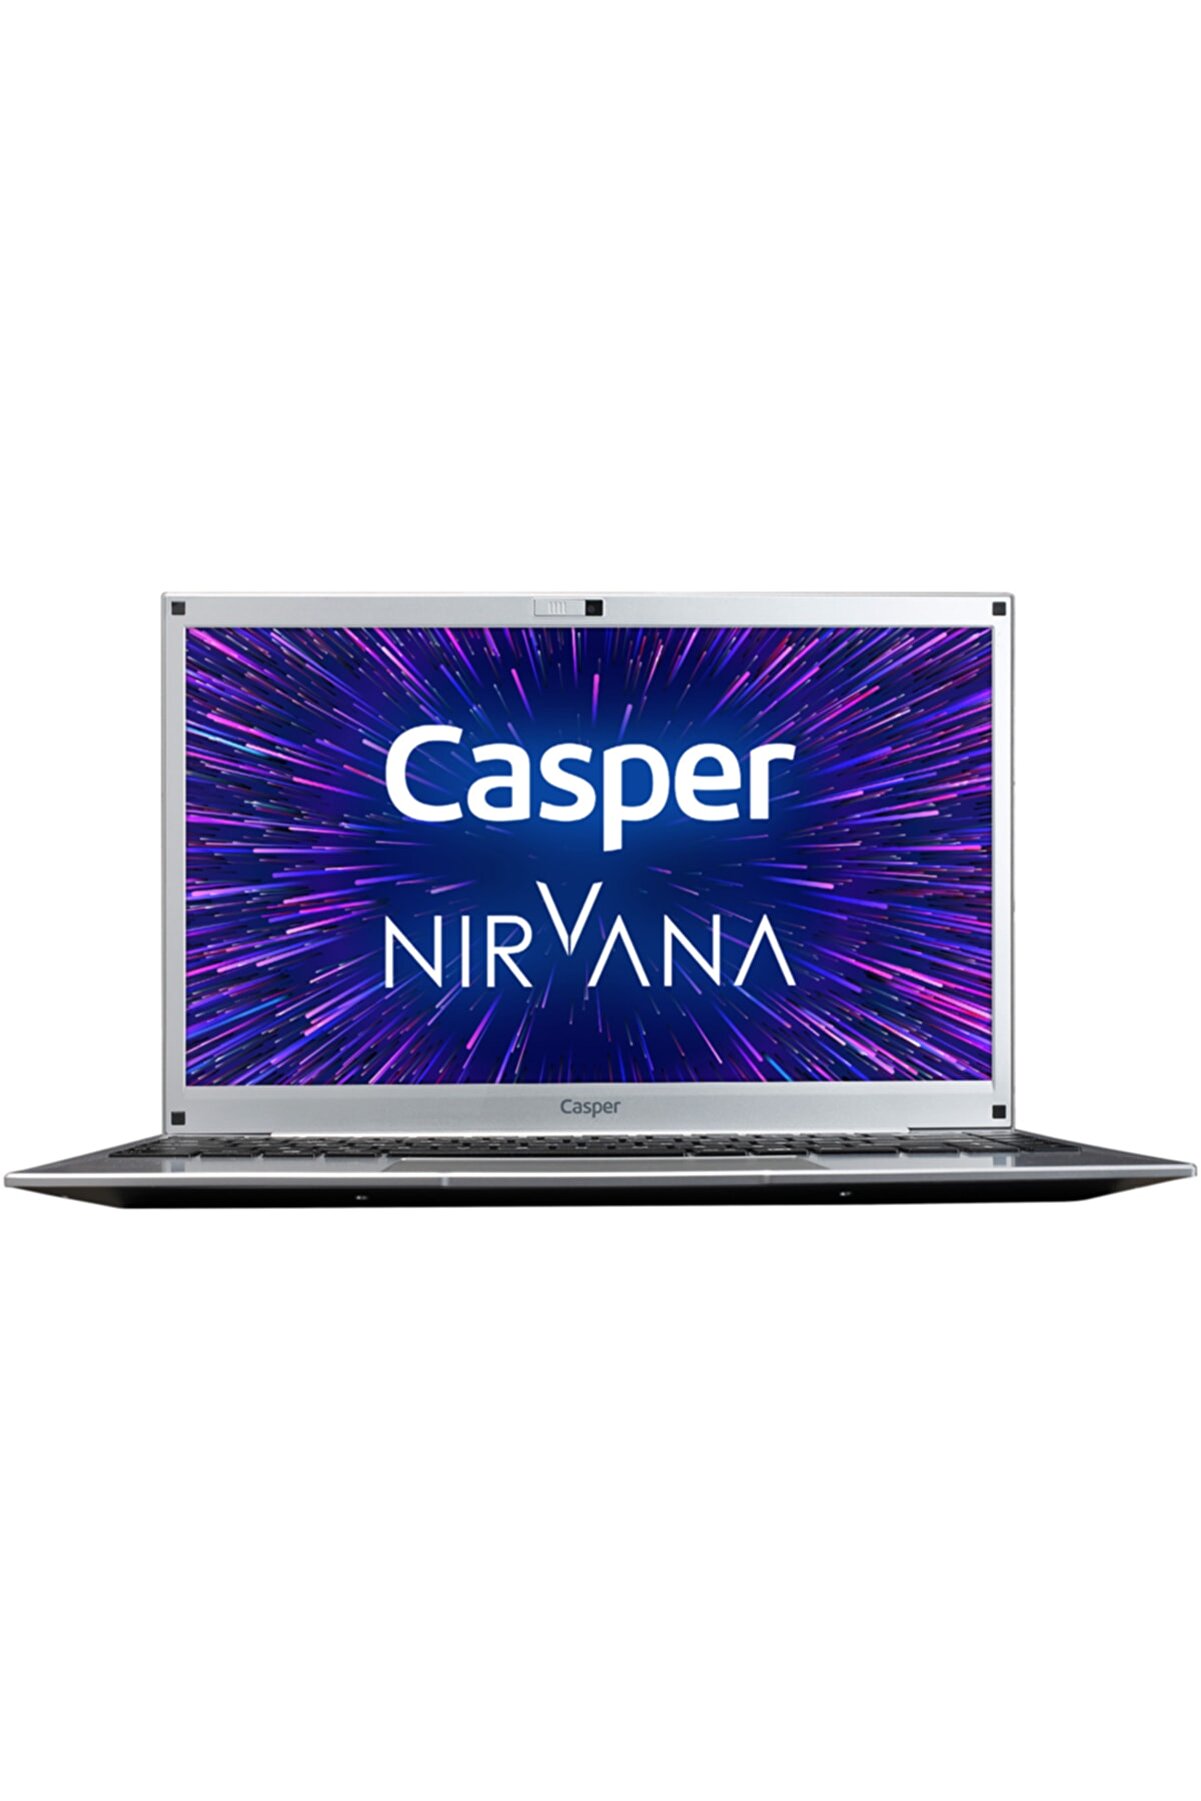 Casper Nirvana C350.5005-4C00E Intel Core i3-5005U 4GB RAM 120GB SSD Windows 10